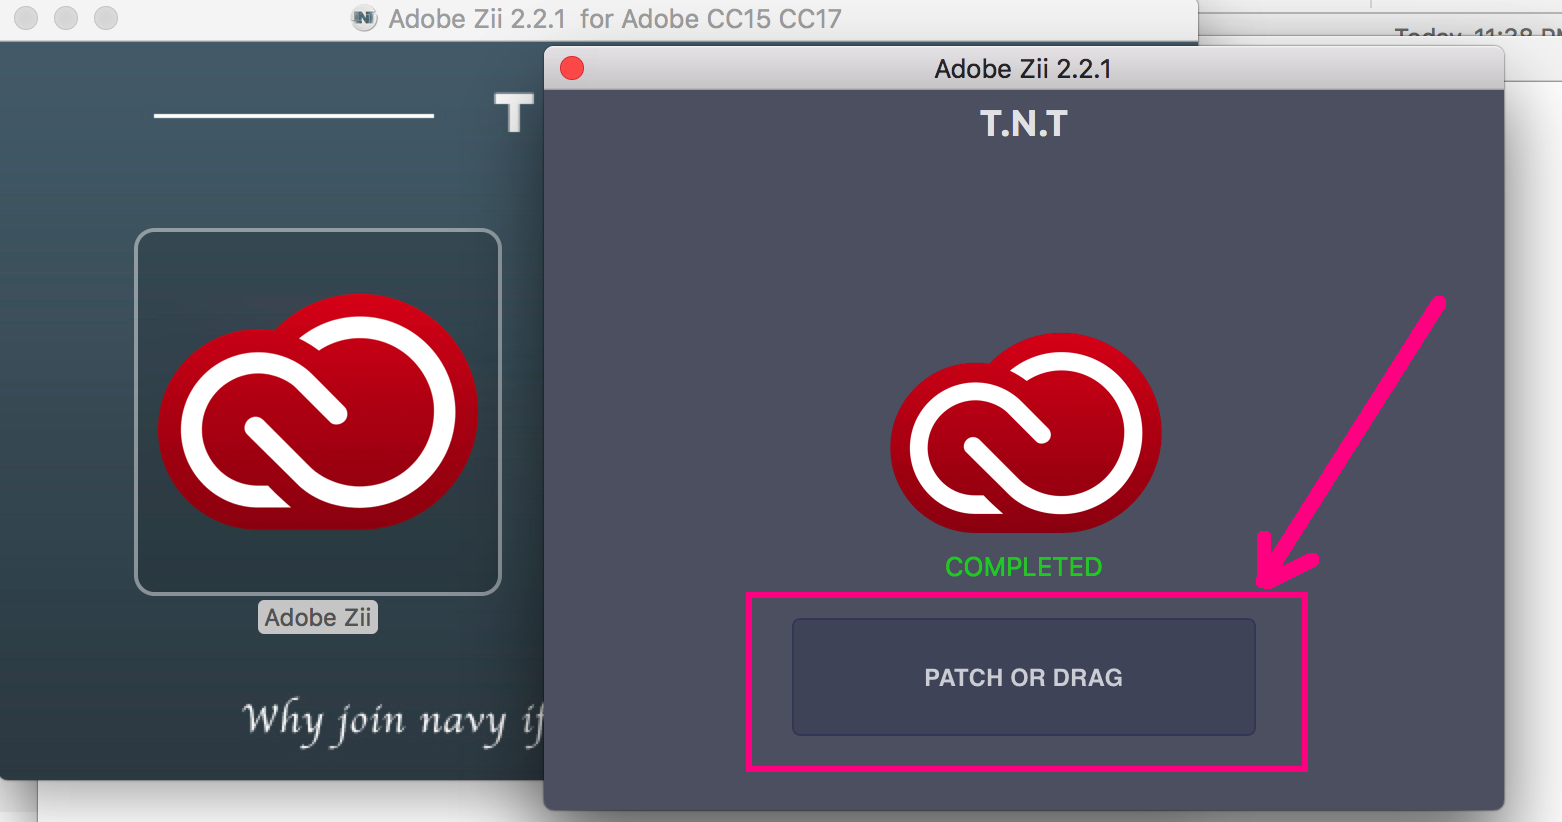 Adobe Zii V2.2 Adobe Cc17.dmg